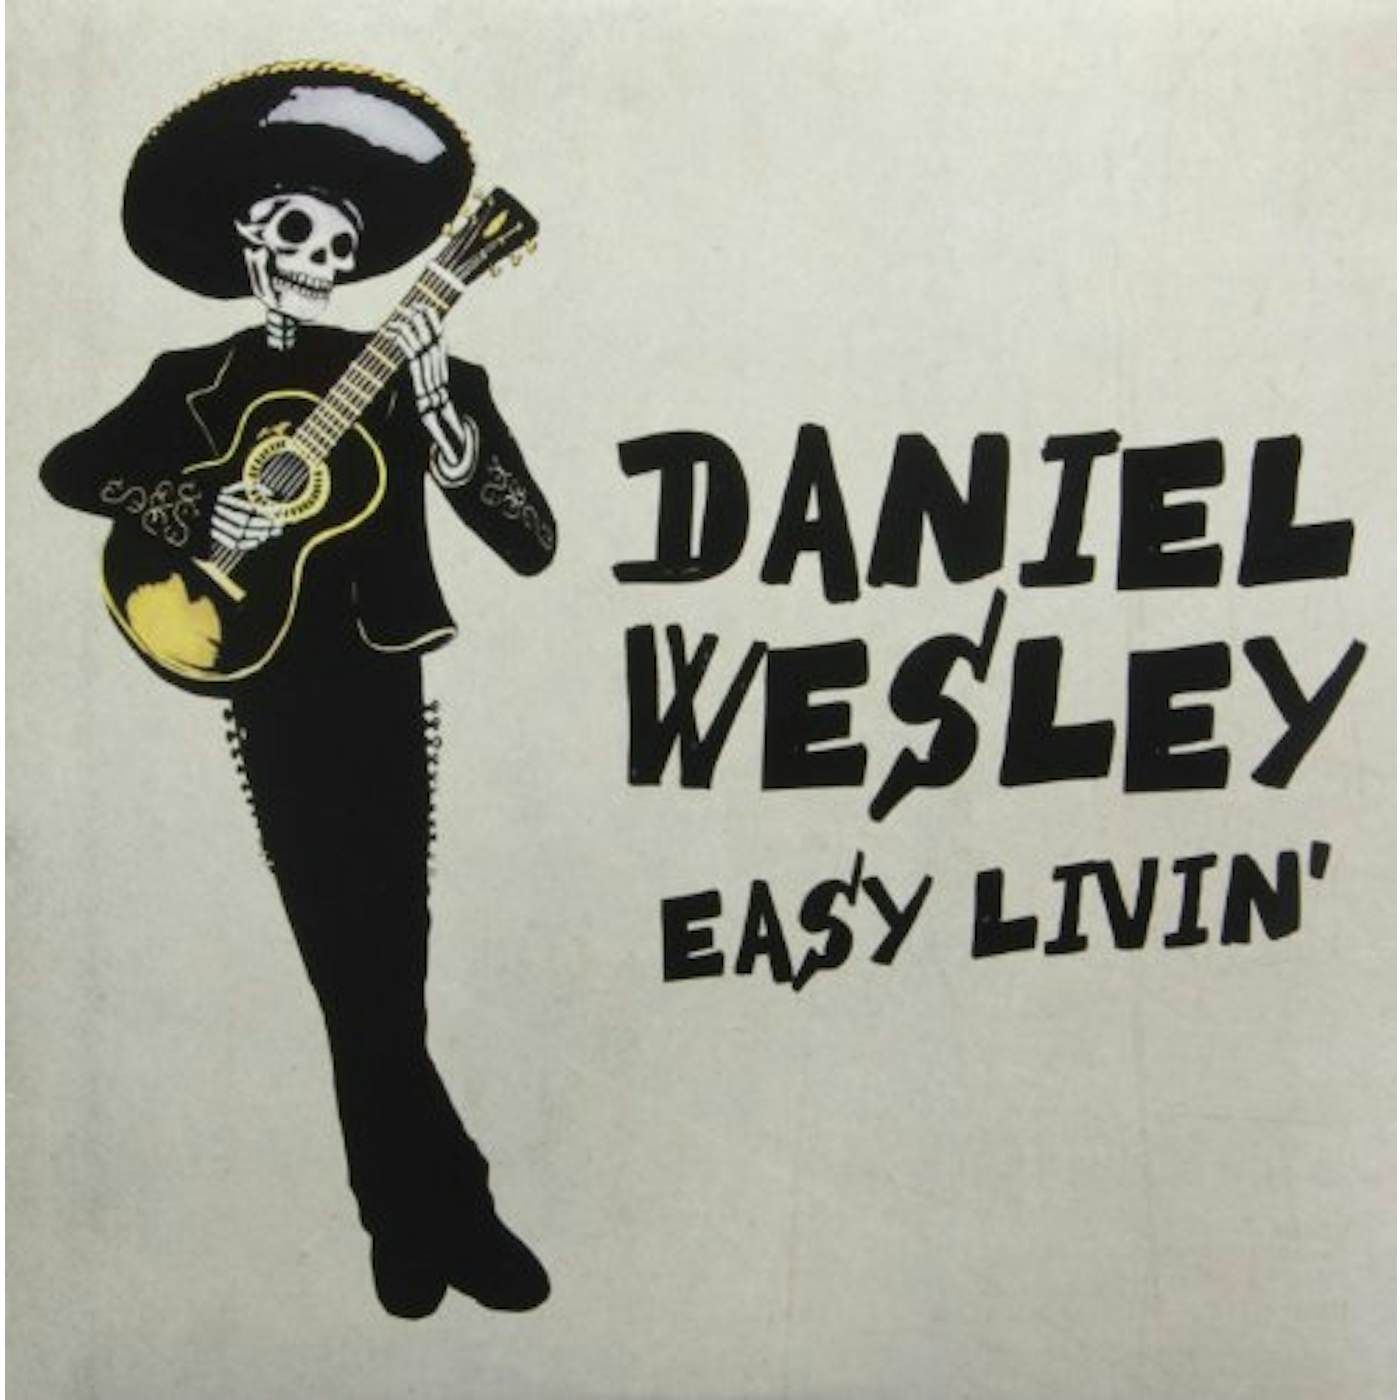 Daniel Wesley EASY LIVIN' Vinyl Record